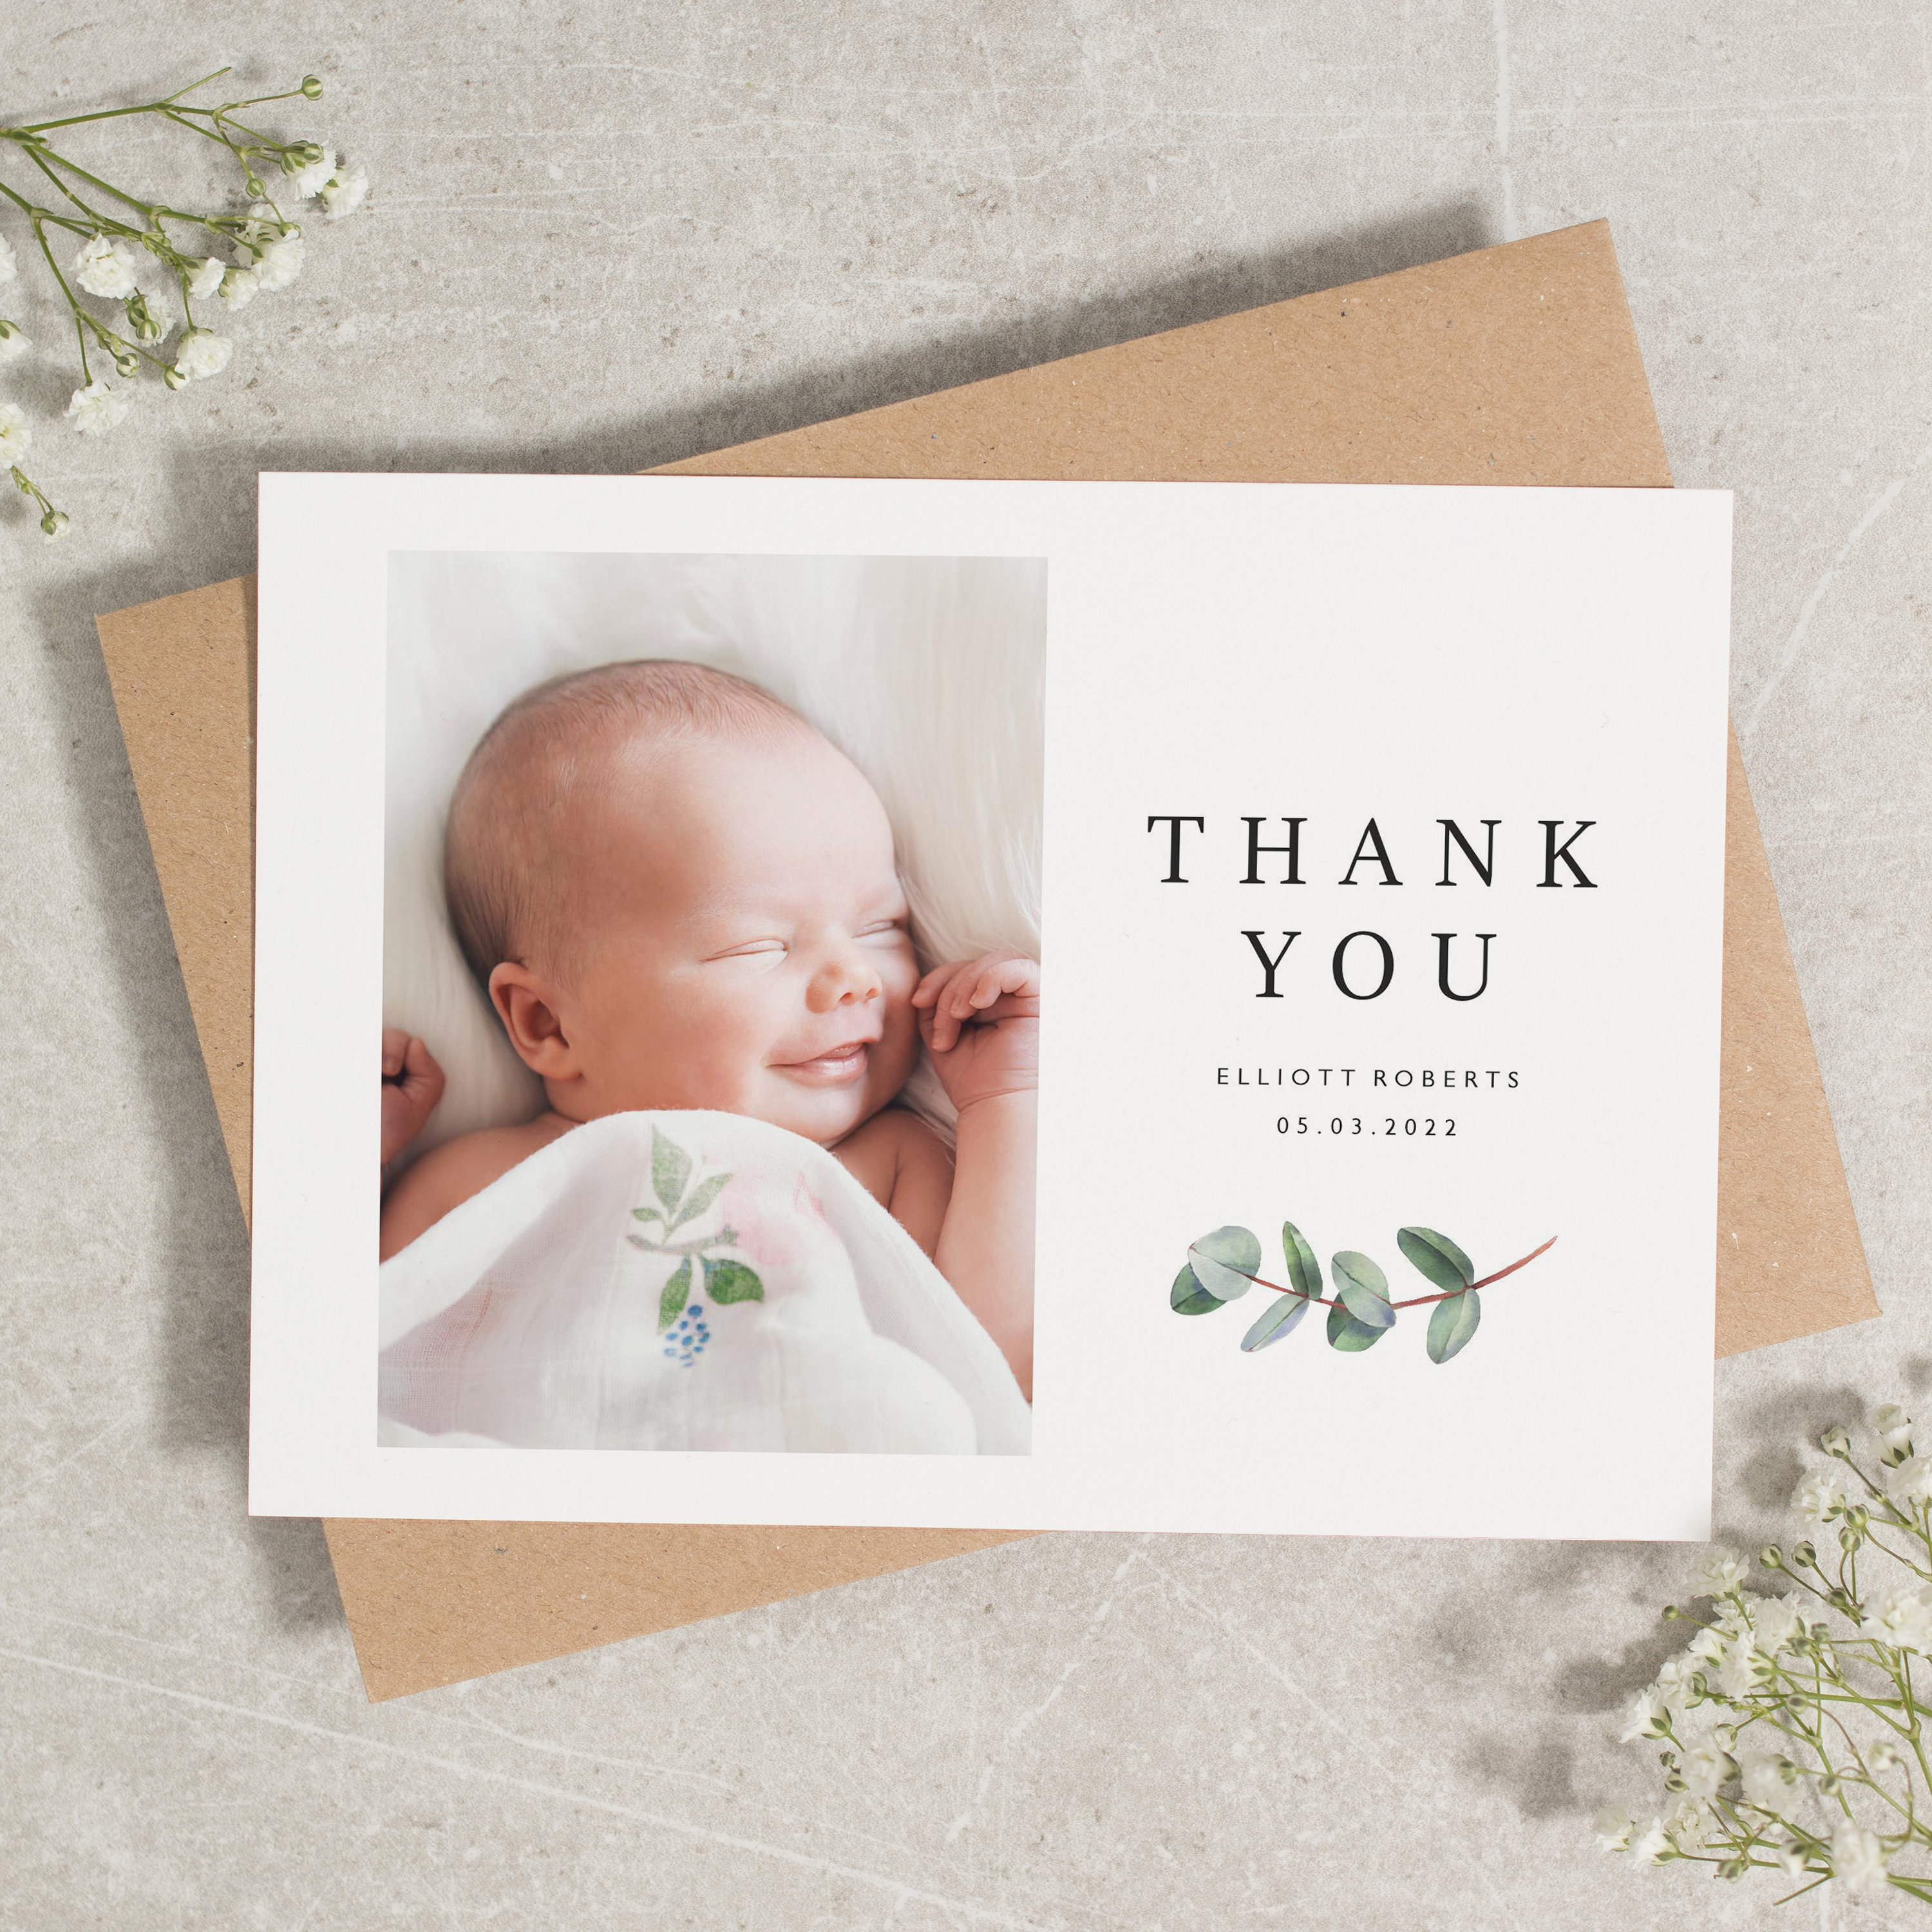 baby-thank-you-card-ubicaciondepersonas-cdmx-gob-mx